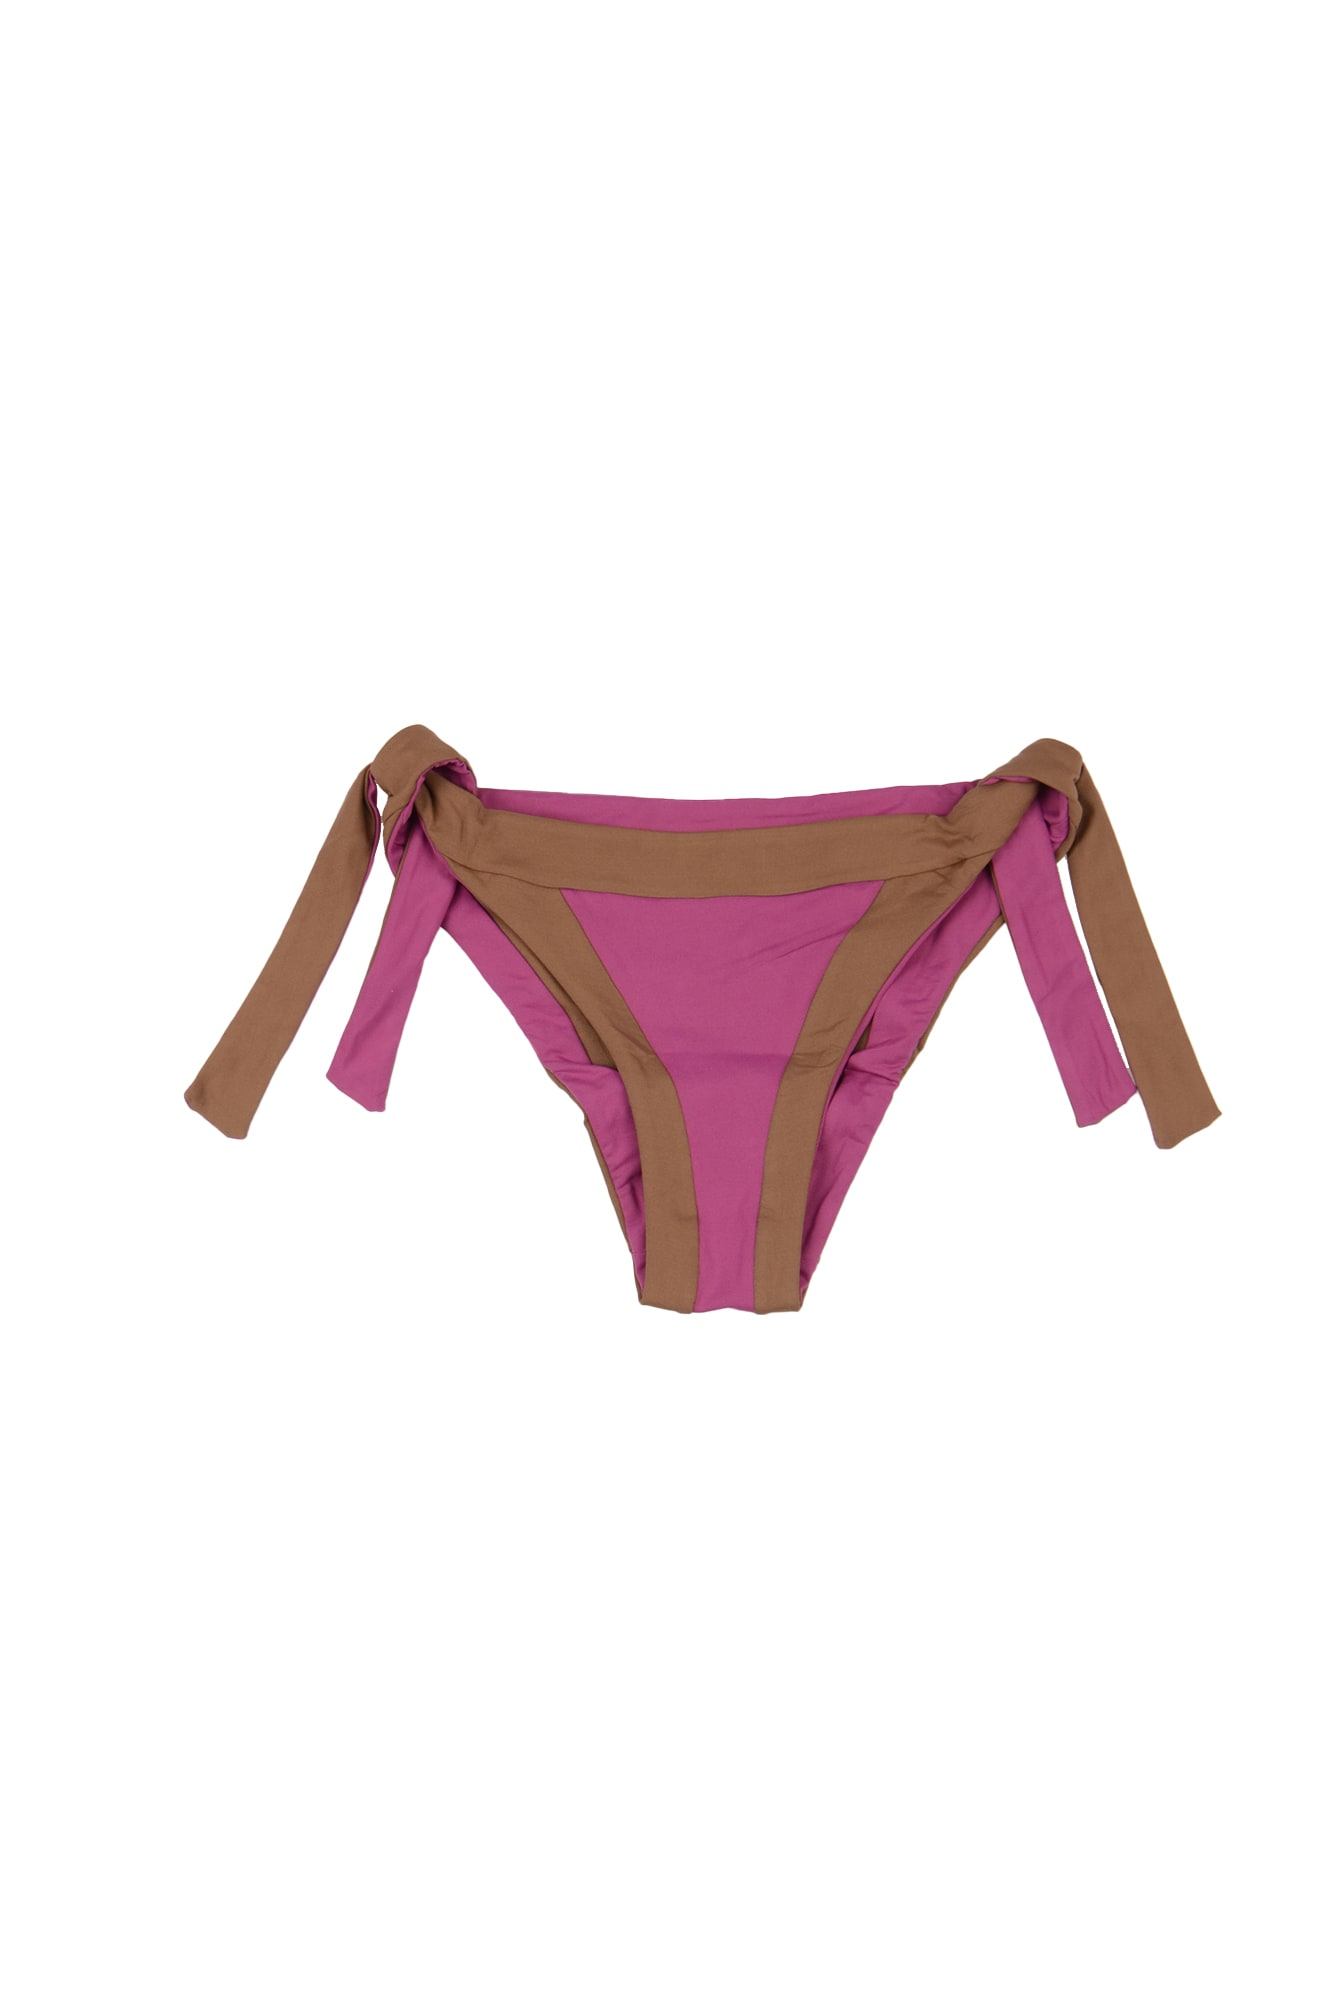 Fisico - Cristina Ferrari Side Knot Paneled Bikini Bottoms